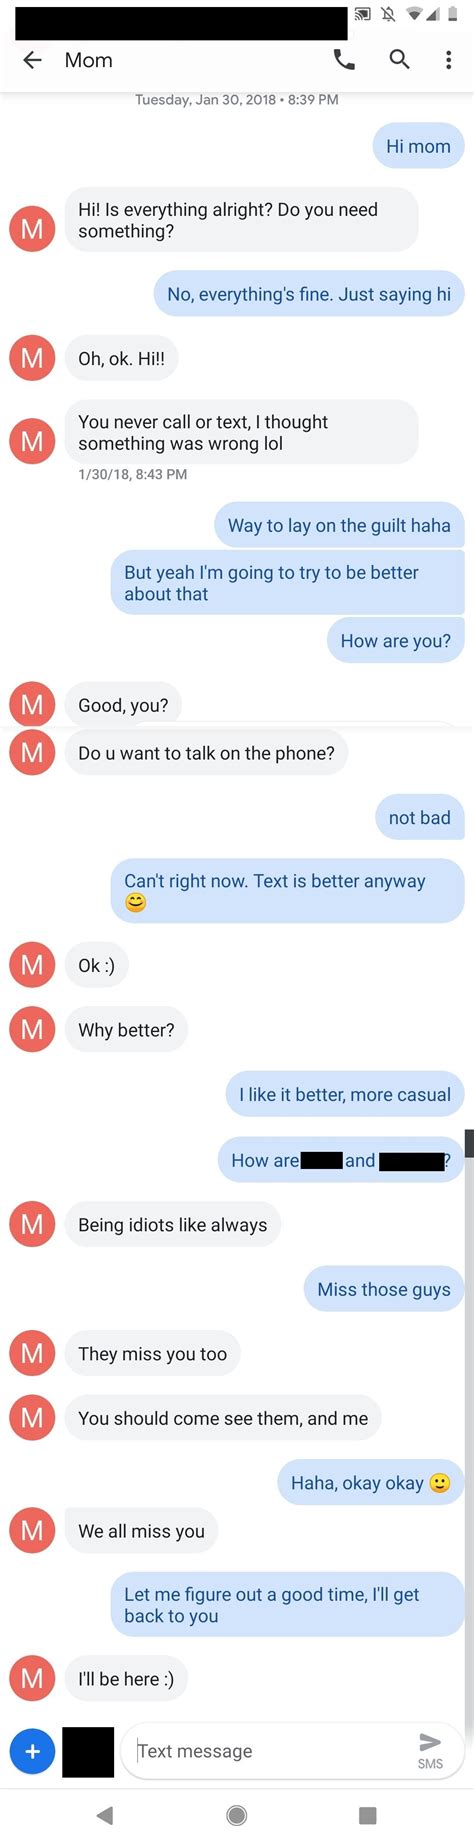 Mom Son Incest Text Telegraph